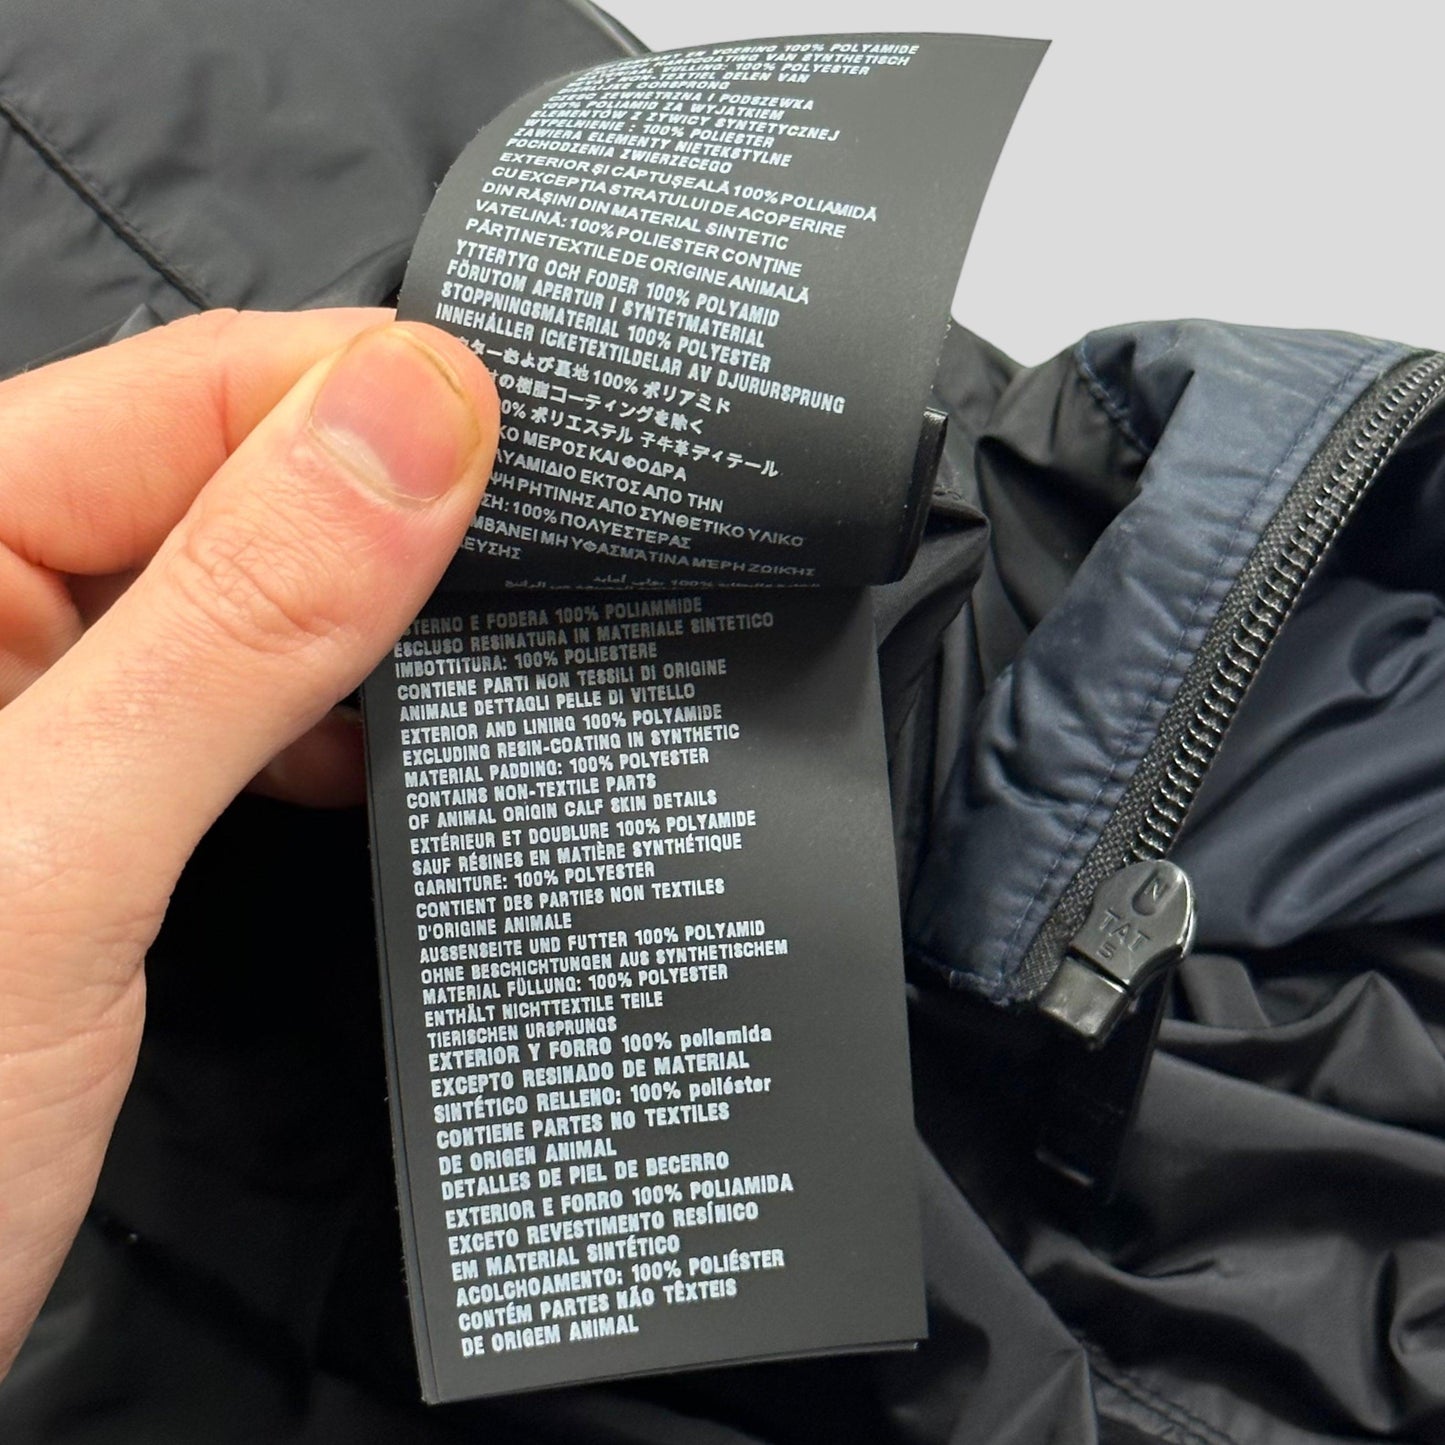 Prada Milano 2019 Laminated Nylon Padded Jacket - L - Known Source